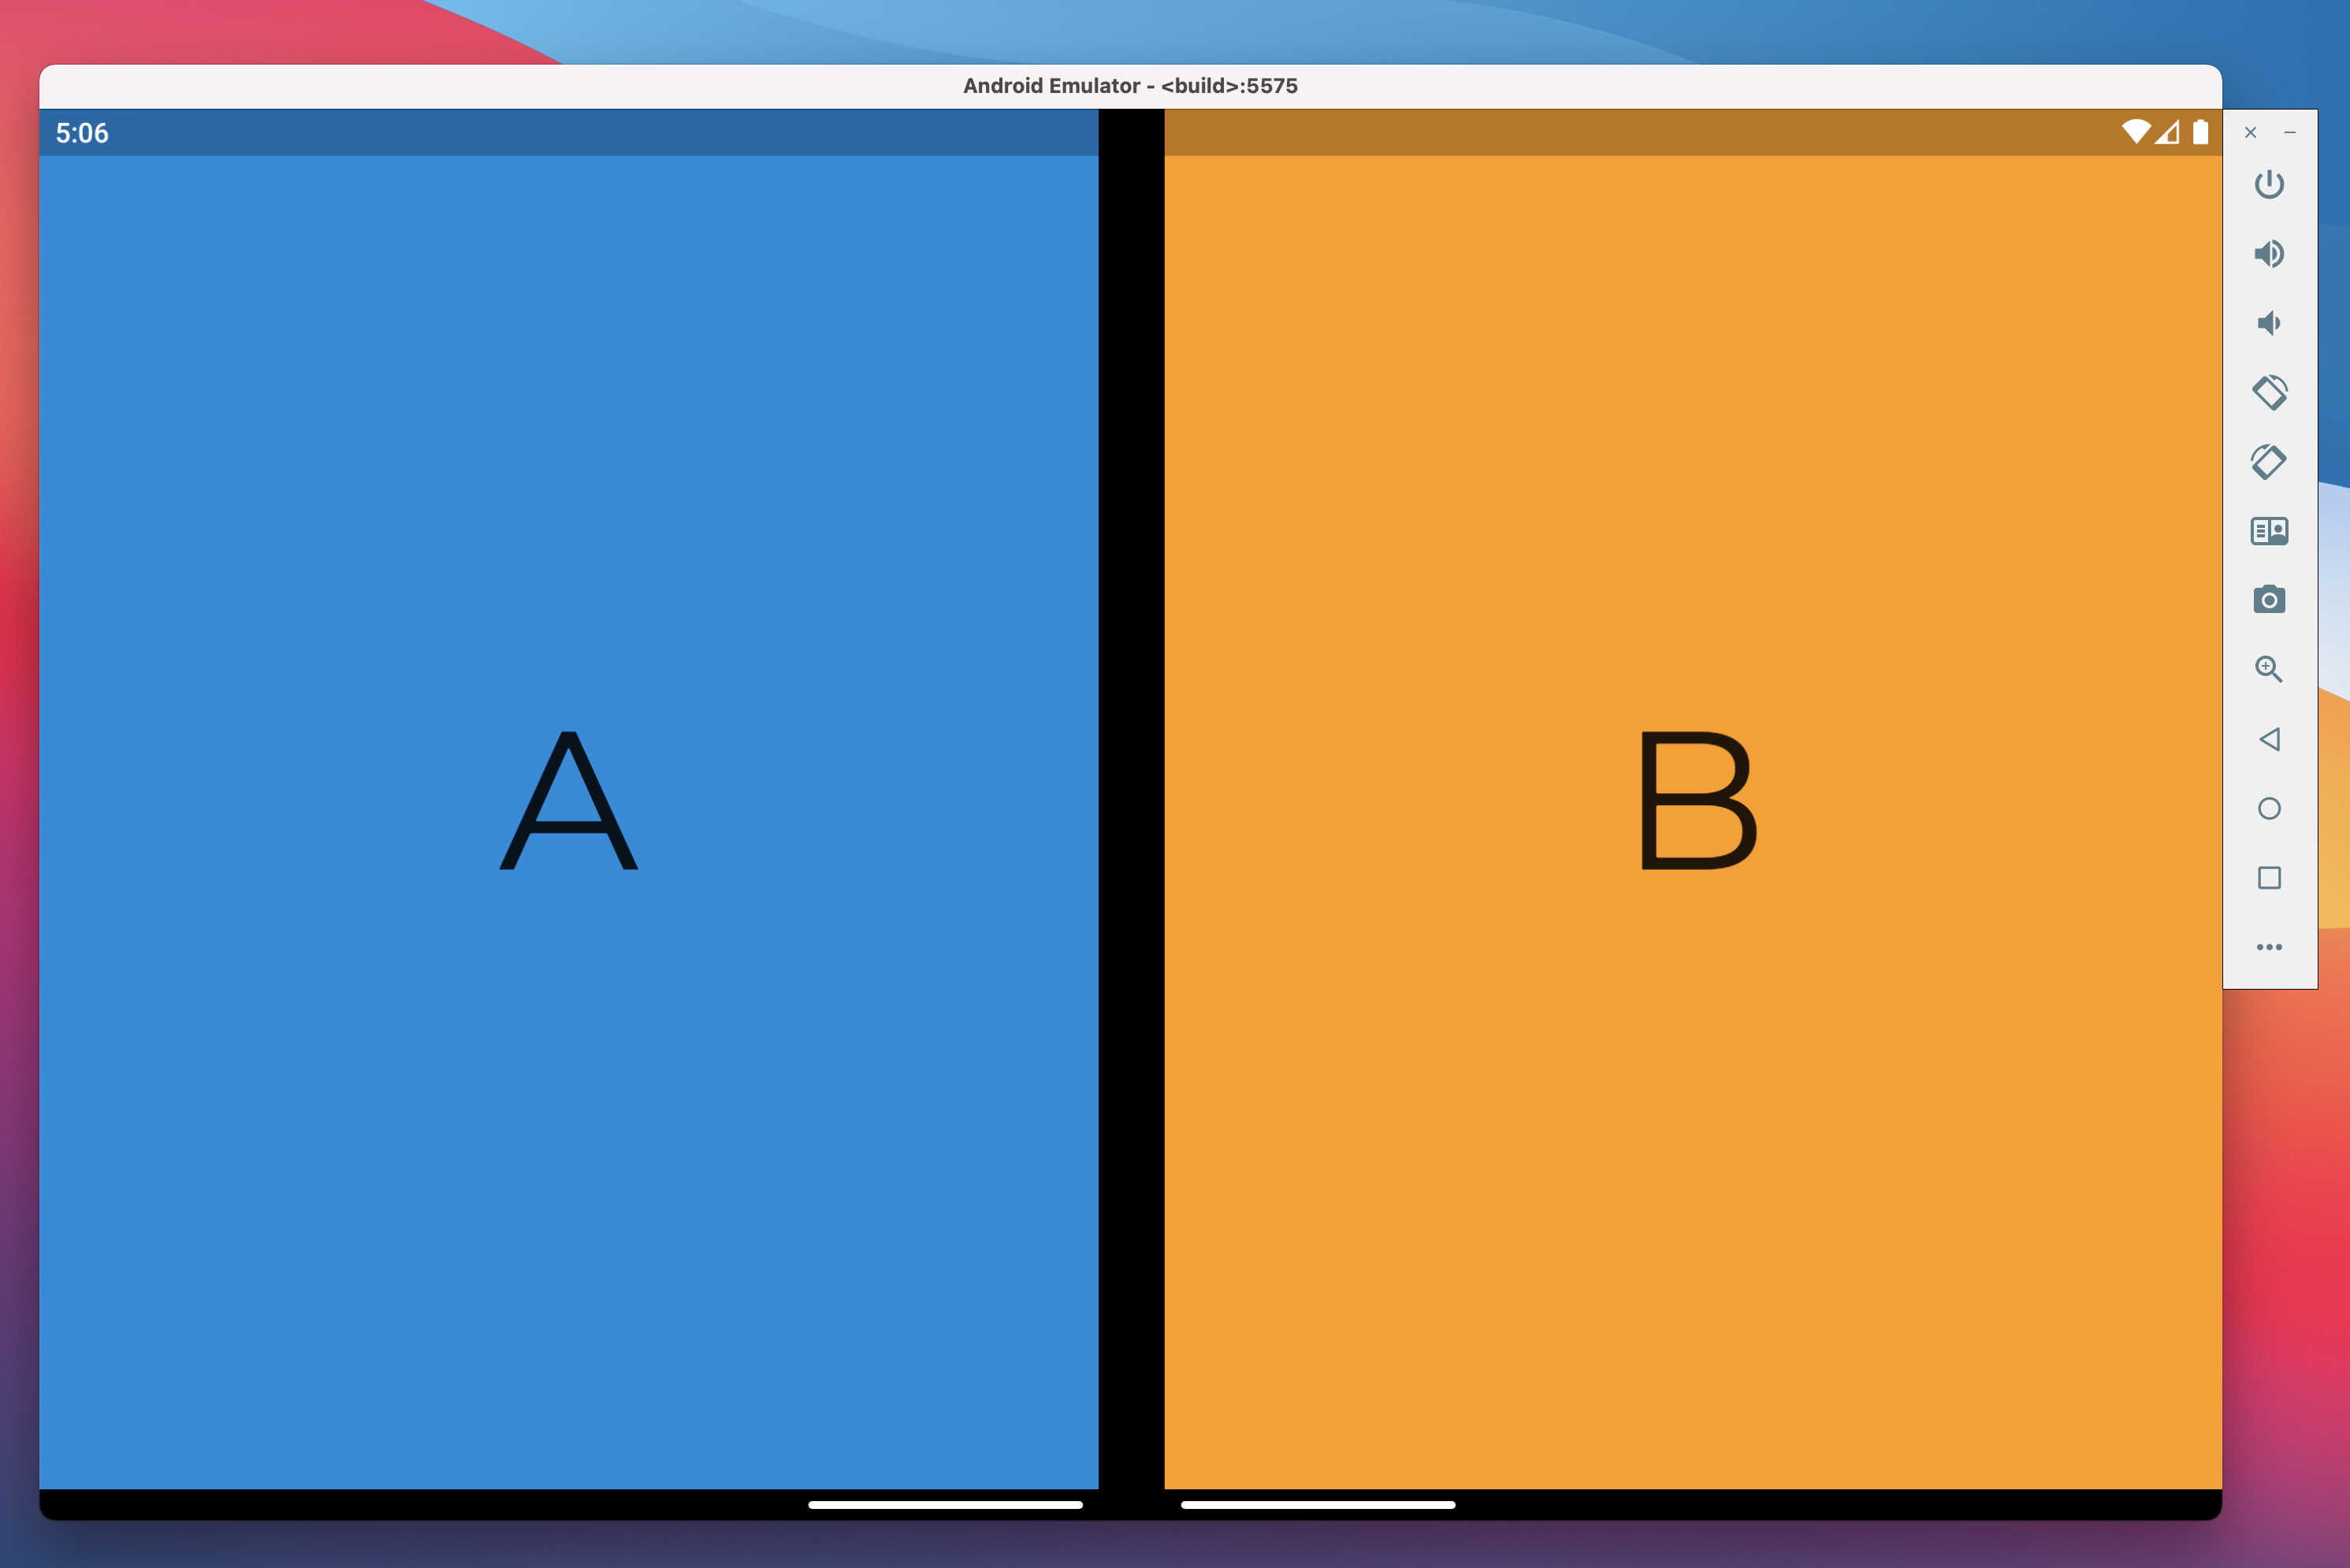 Flutter TwoPaneView di Surface Duo, layar kiri menampilkan widget biru dan layar kanan menunjukkan widget oranye